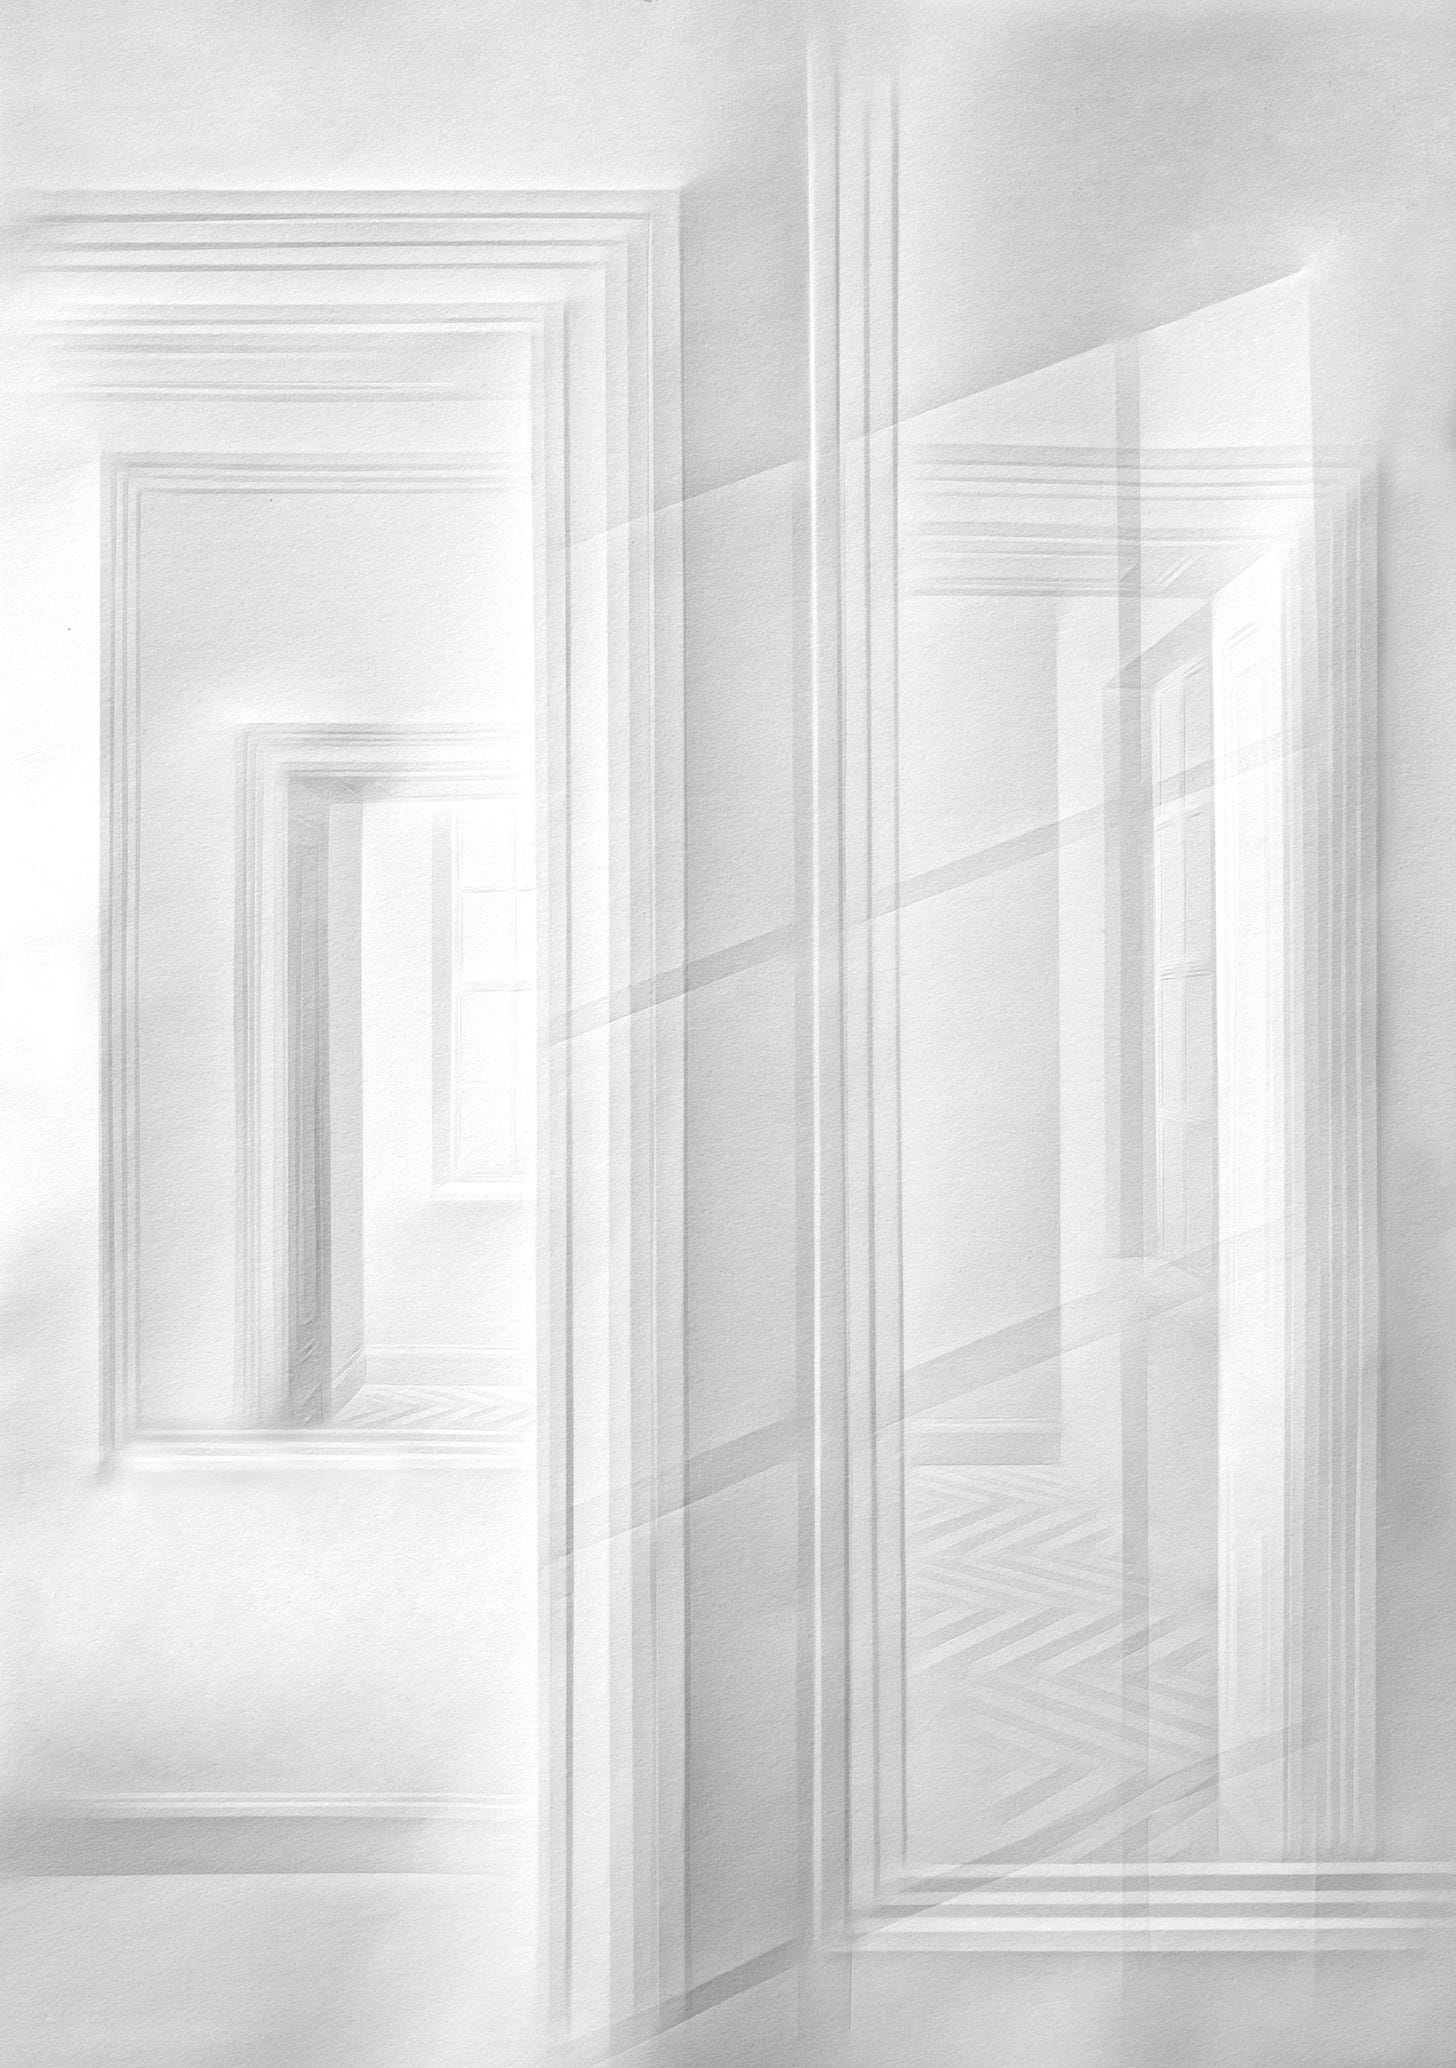 Simon Schubert, “Untitled (Intricated Light)” (2022)